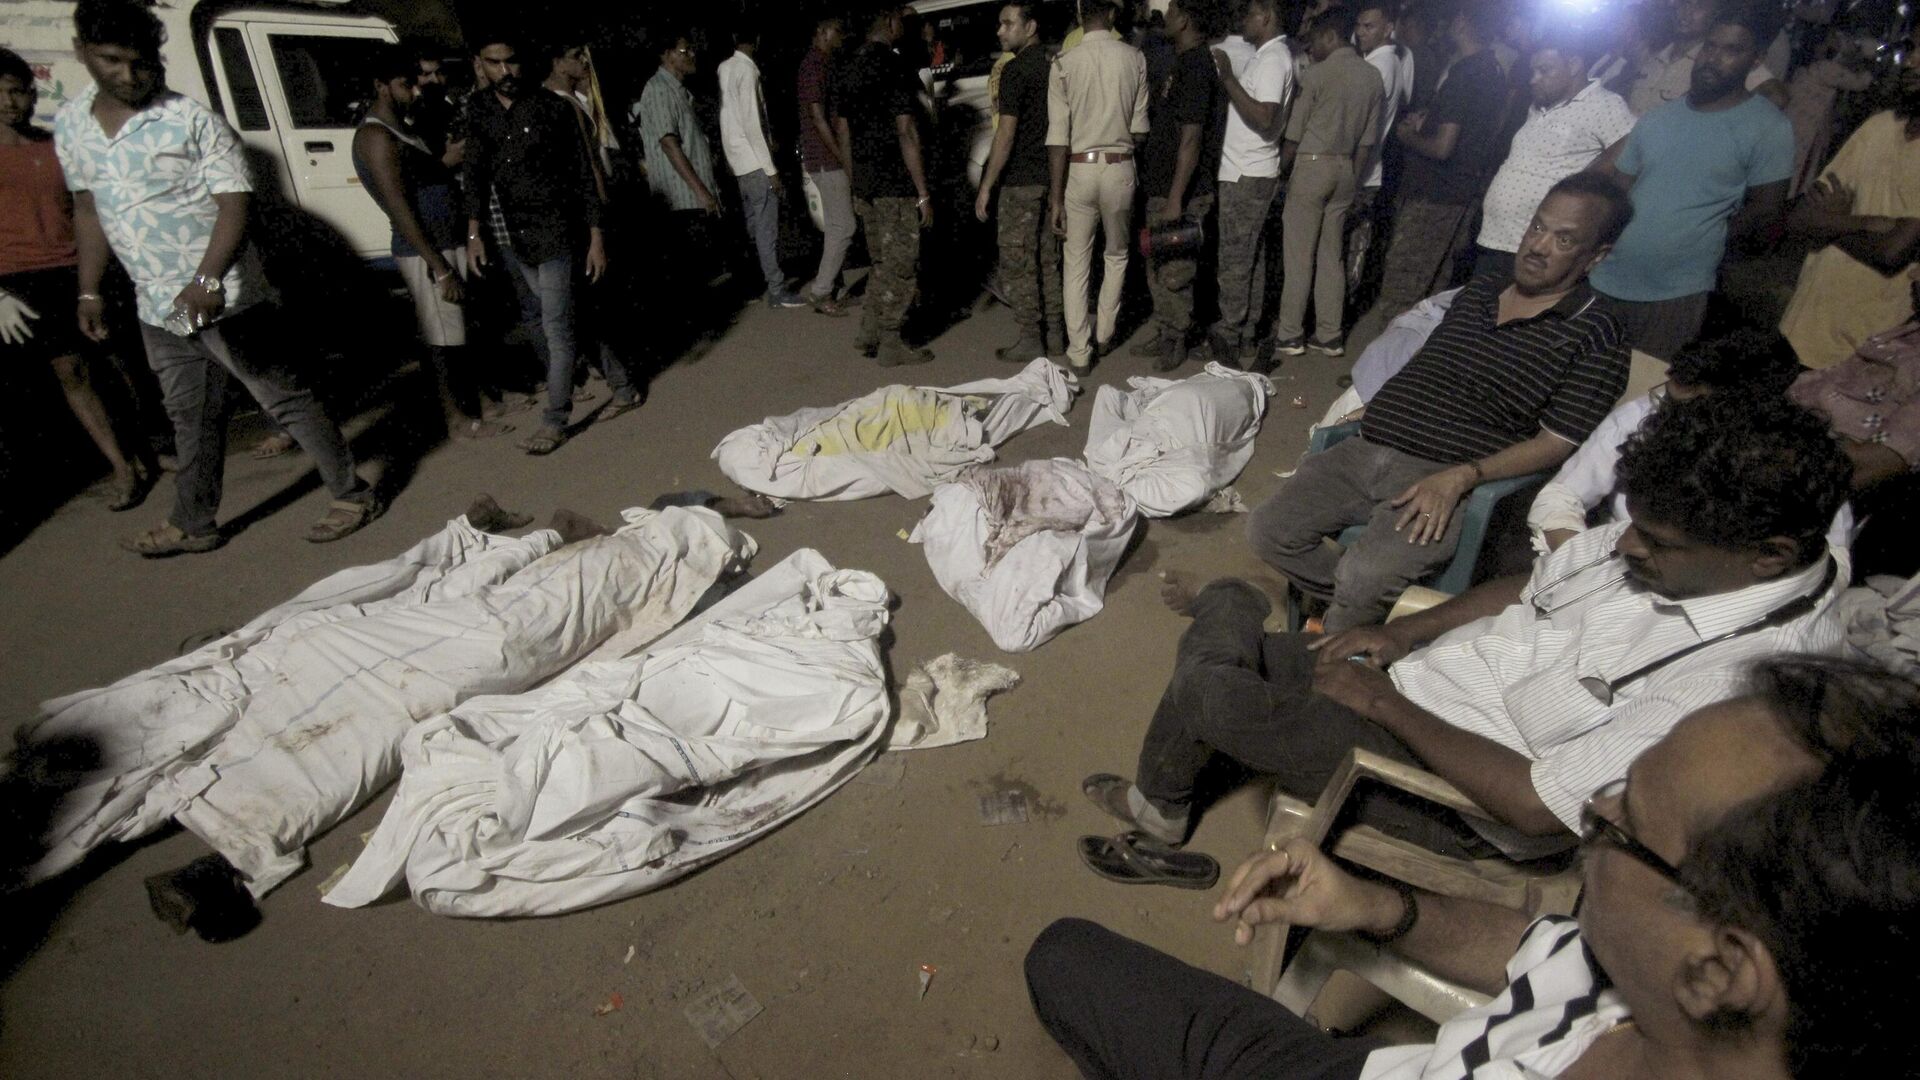 Media: Death toll in train collision in India rises to 288